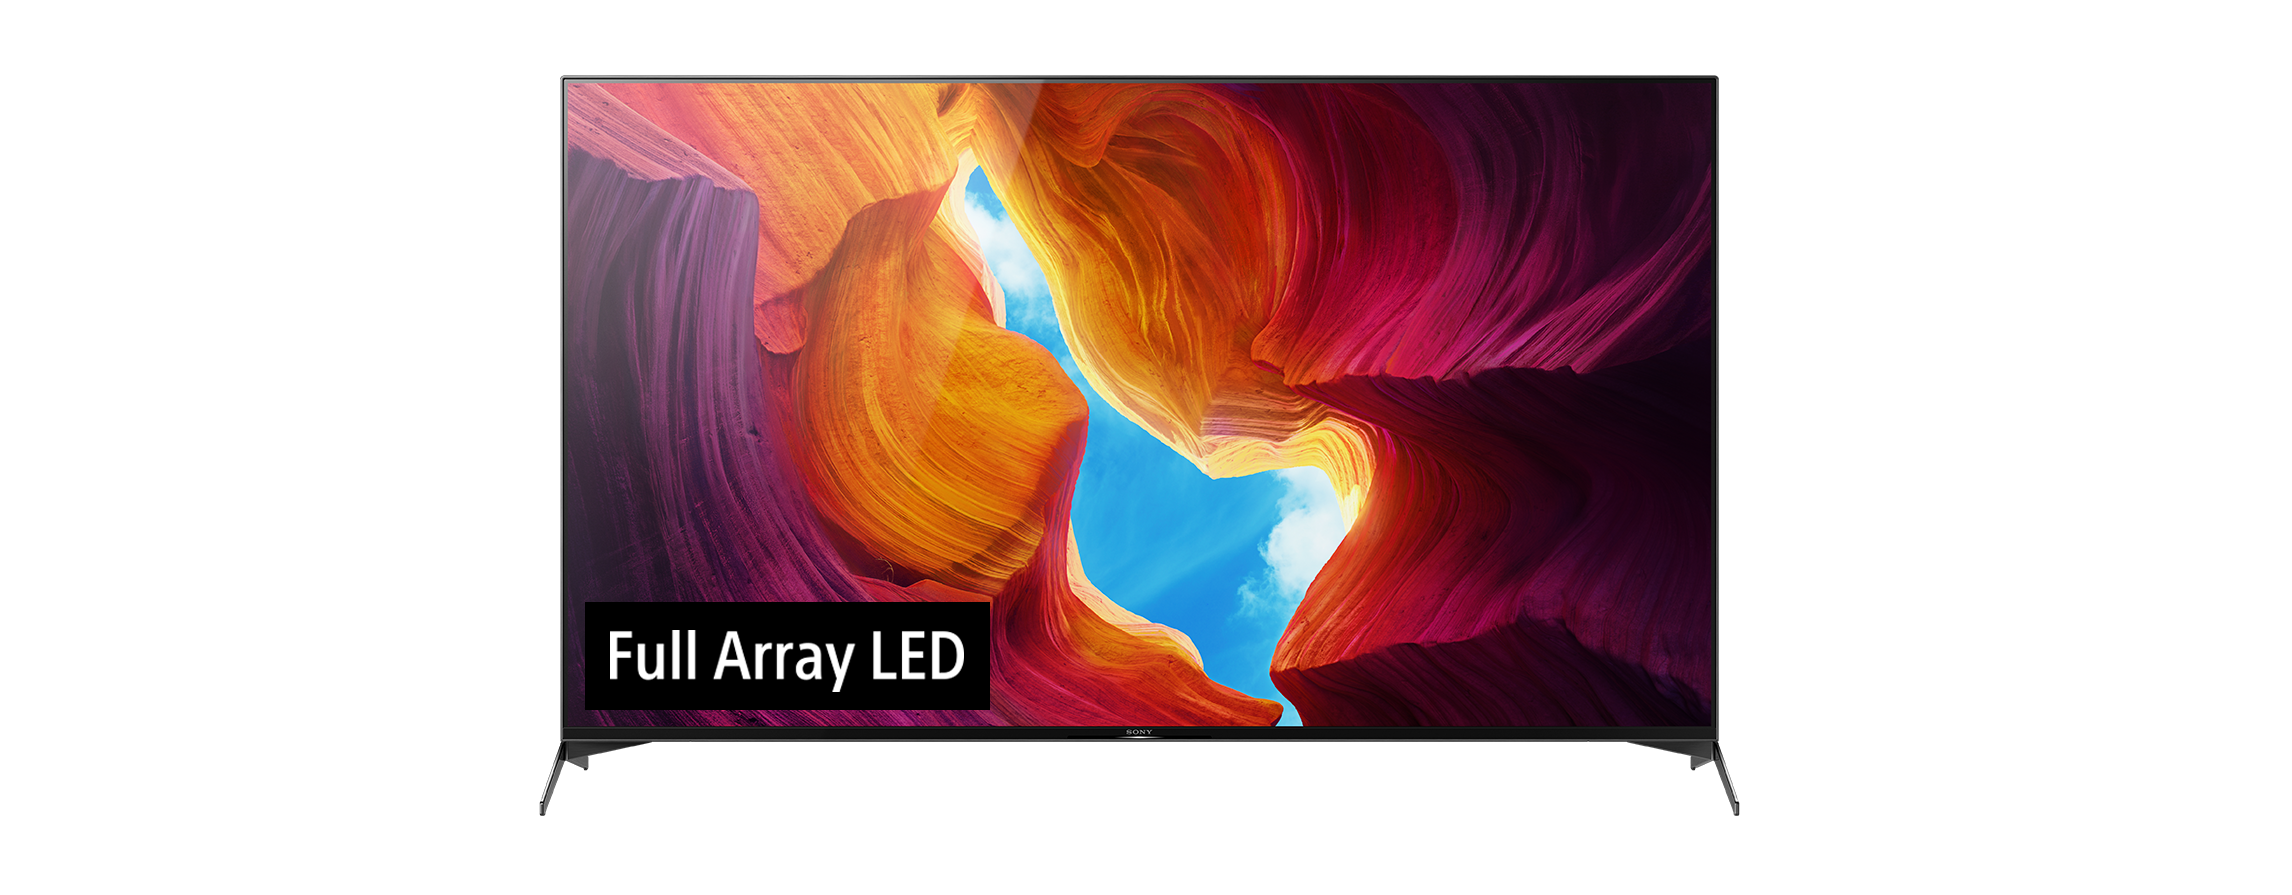 49X9500H | Full Array LED | 4K Ultra HD | Dải tần nhạy sáng cao (HDR) | Smart TV (TV Android)